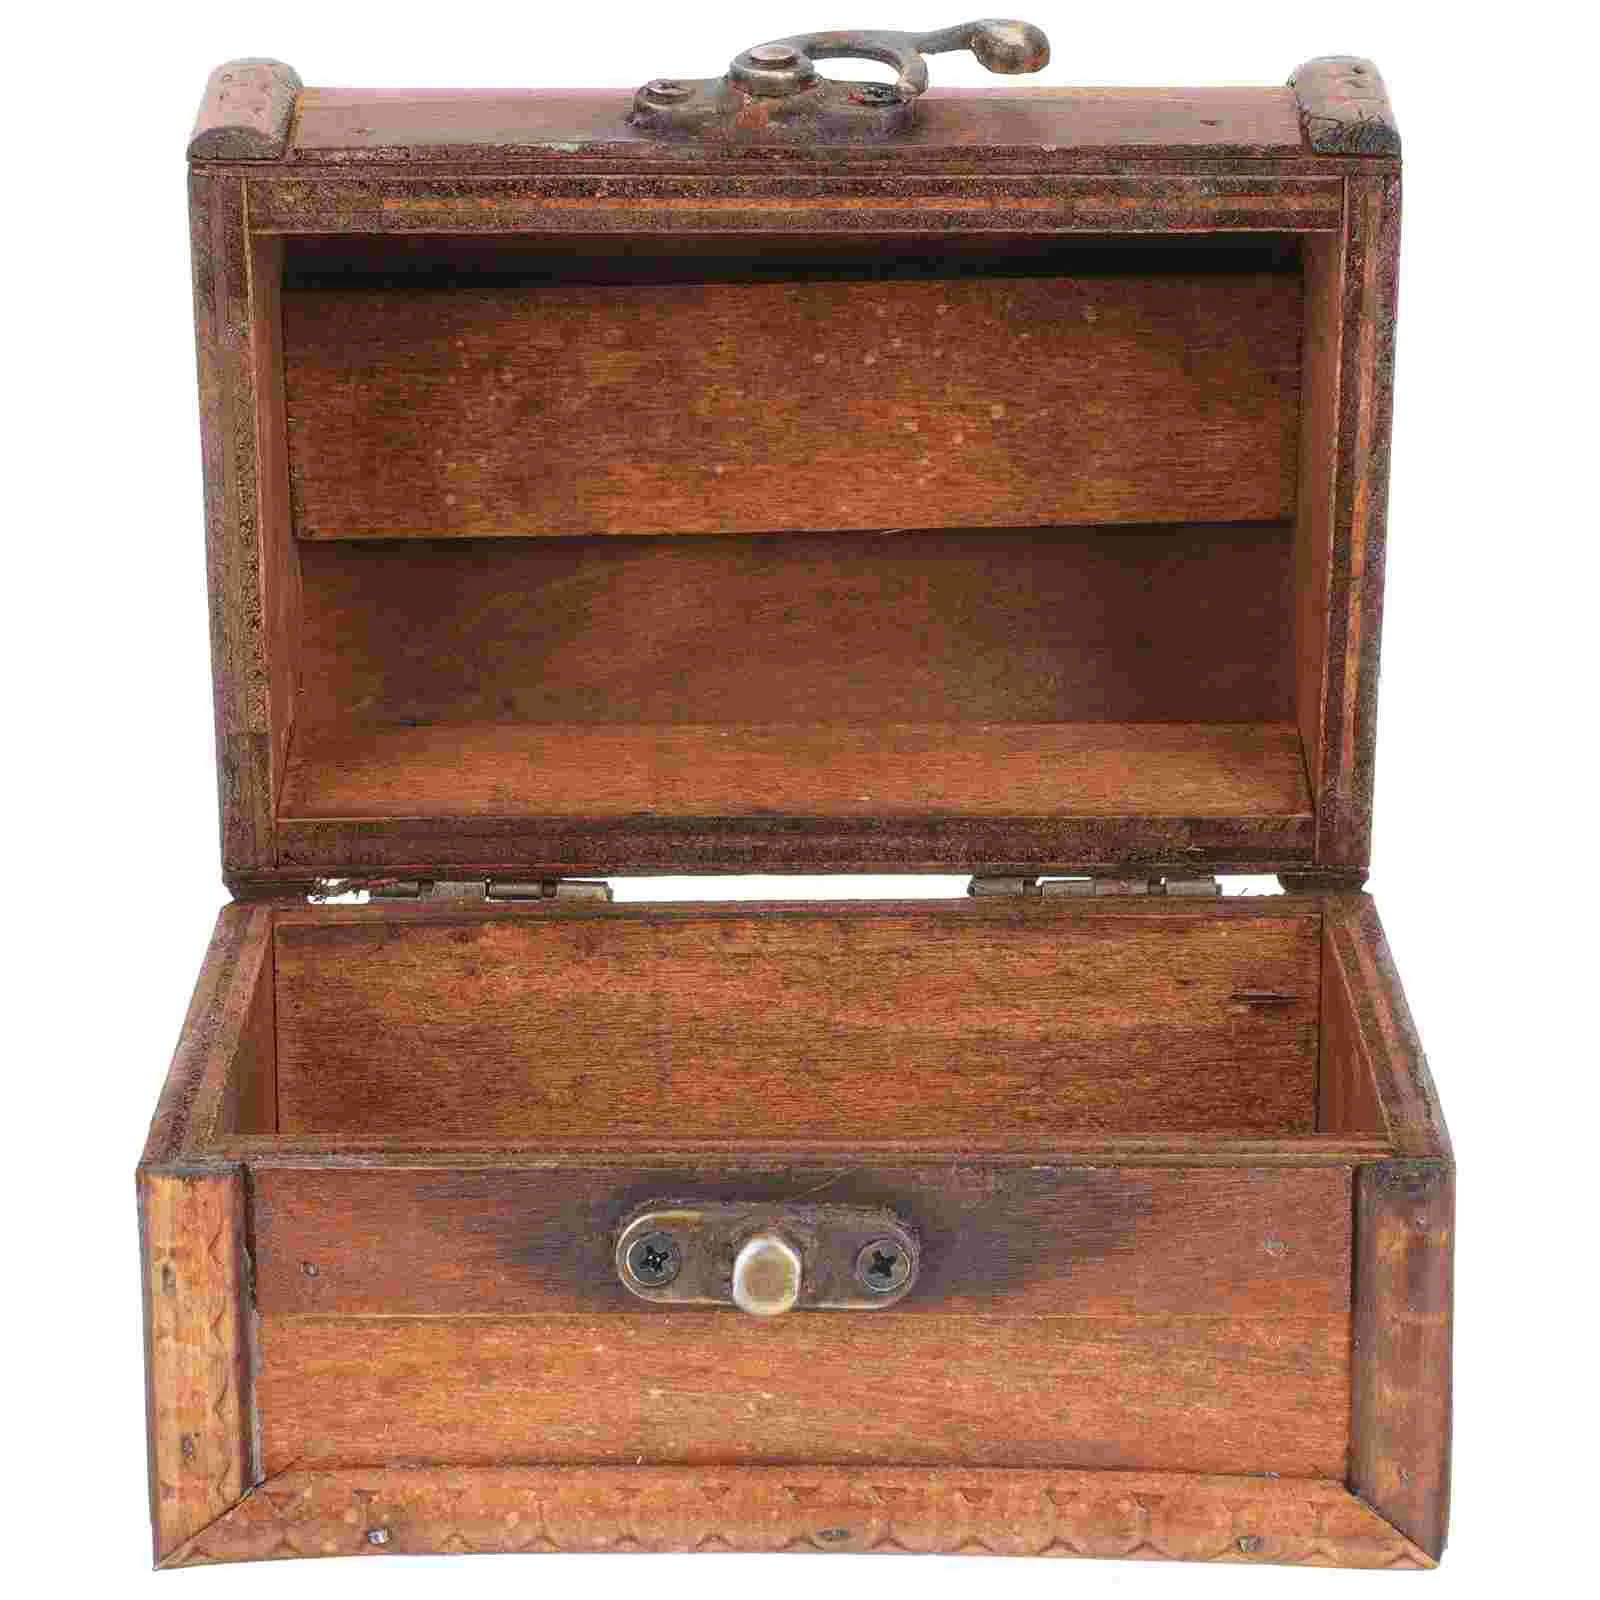 

Retro Piggy Bank Treasure Box Decorative Adult Children Wood Storage Box Piggy Bank Box Wooden Treasure Trunk with Lock for Kids